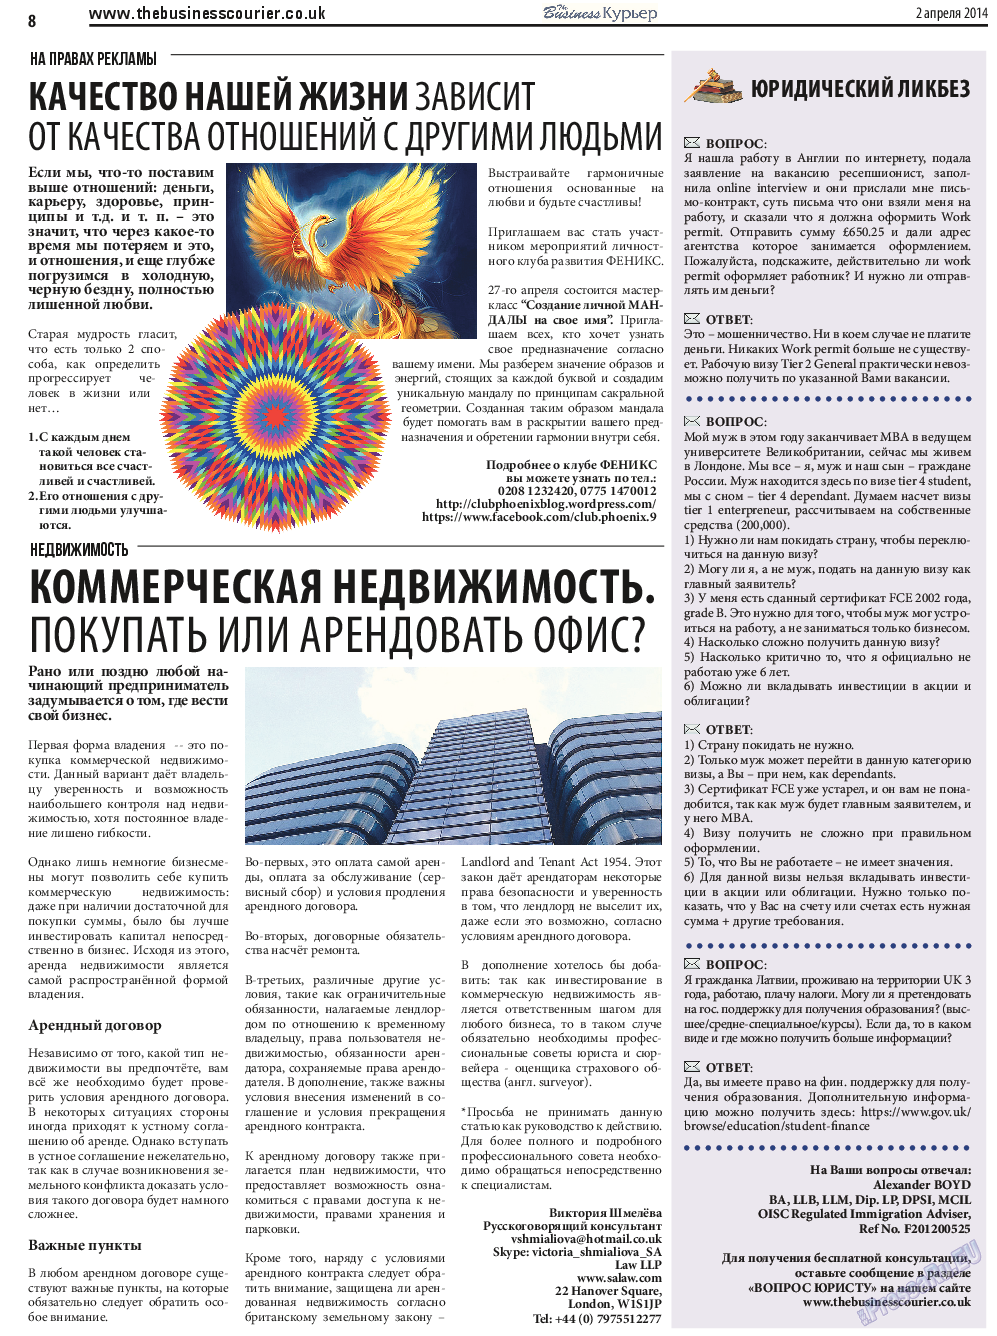 The Business Курьер, газета. 2014 №22 стр.8